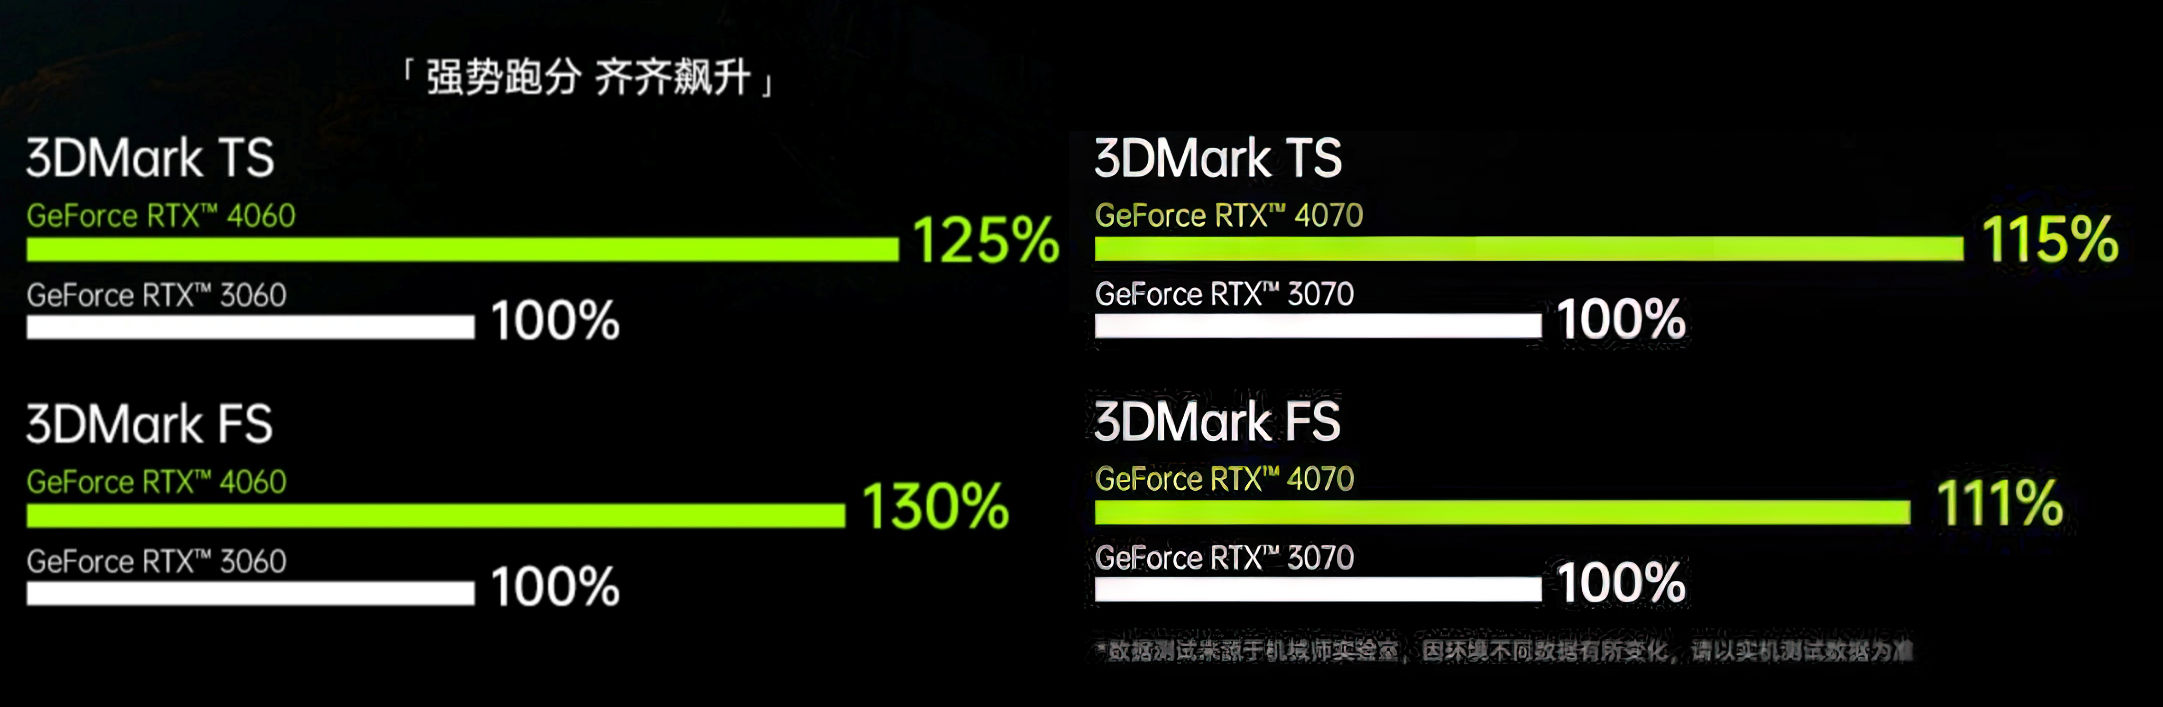 nvidia rtx 4060 4070 performance หลุดผลทดสอบการ์ดจอ Nvidia GeForce RTX 4070 รุ่น Laptop แรงกว่า RTX 3070 ประมาณ 11%   15% 